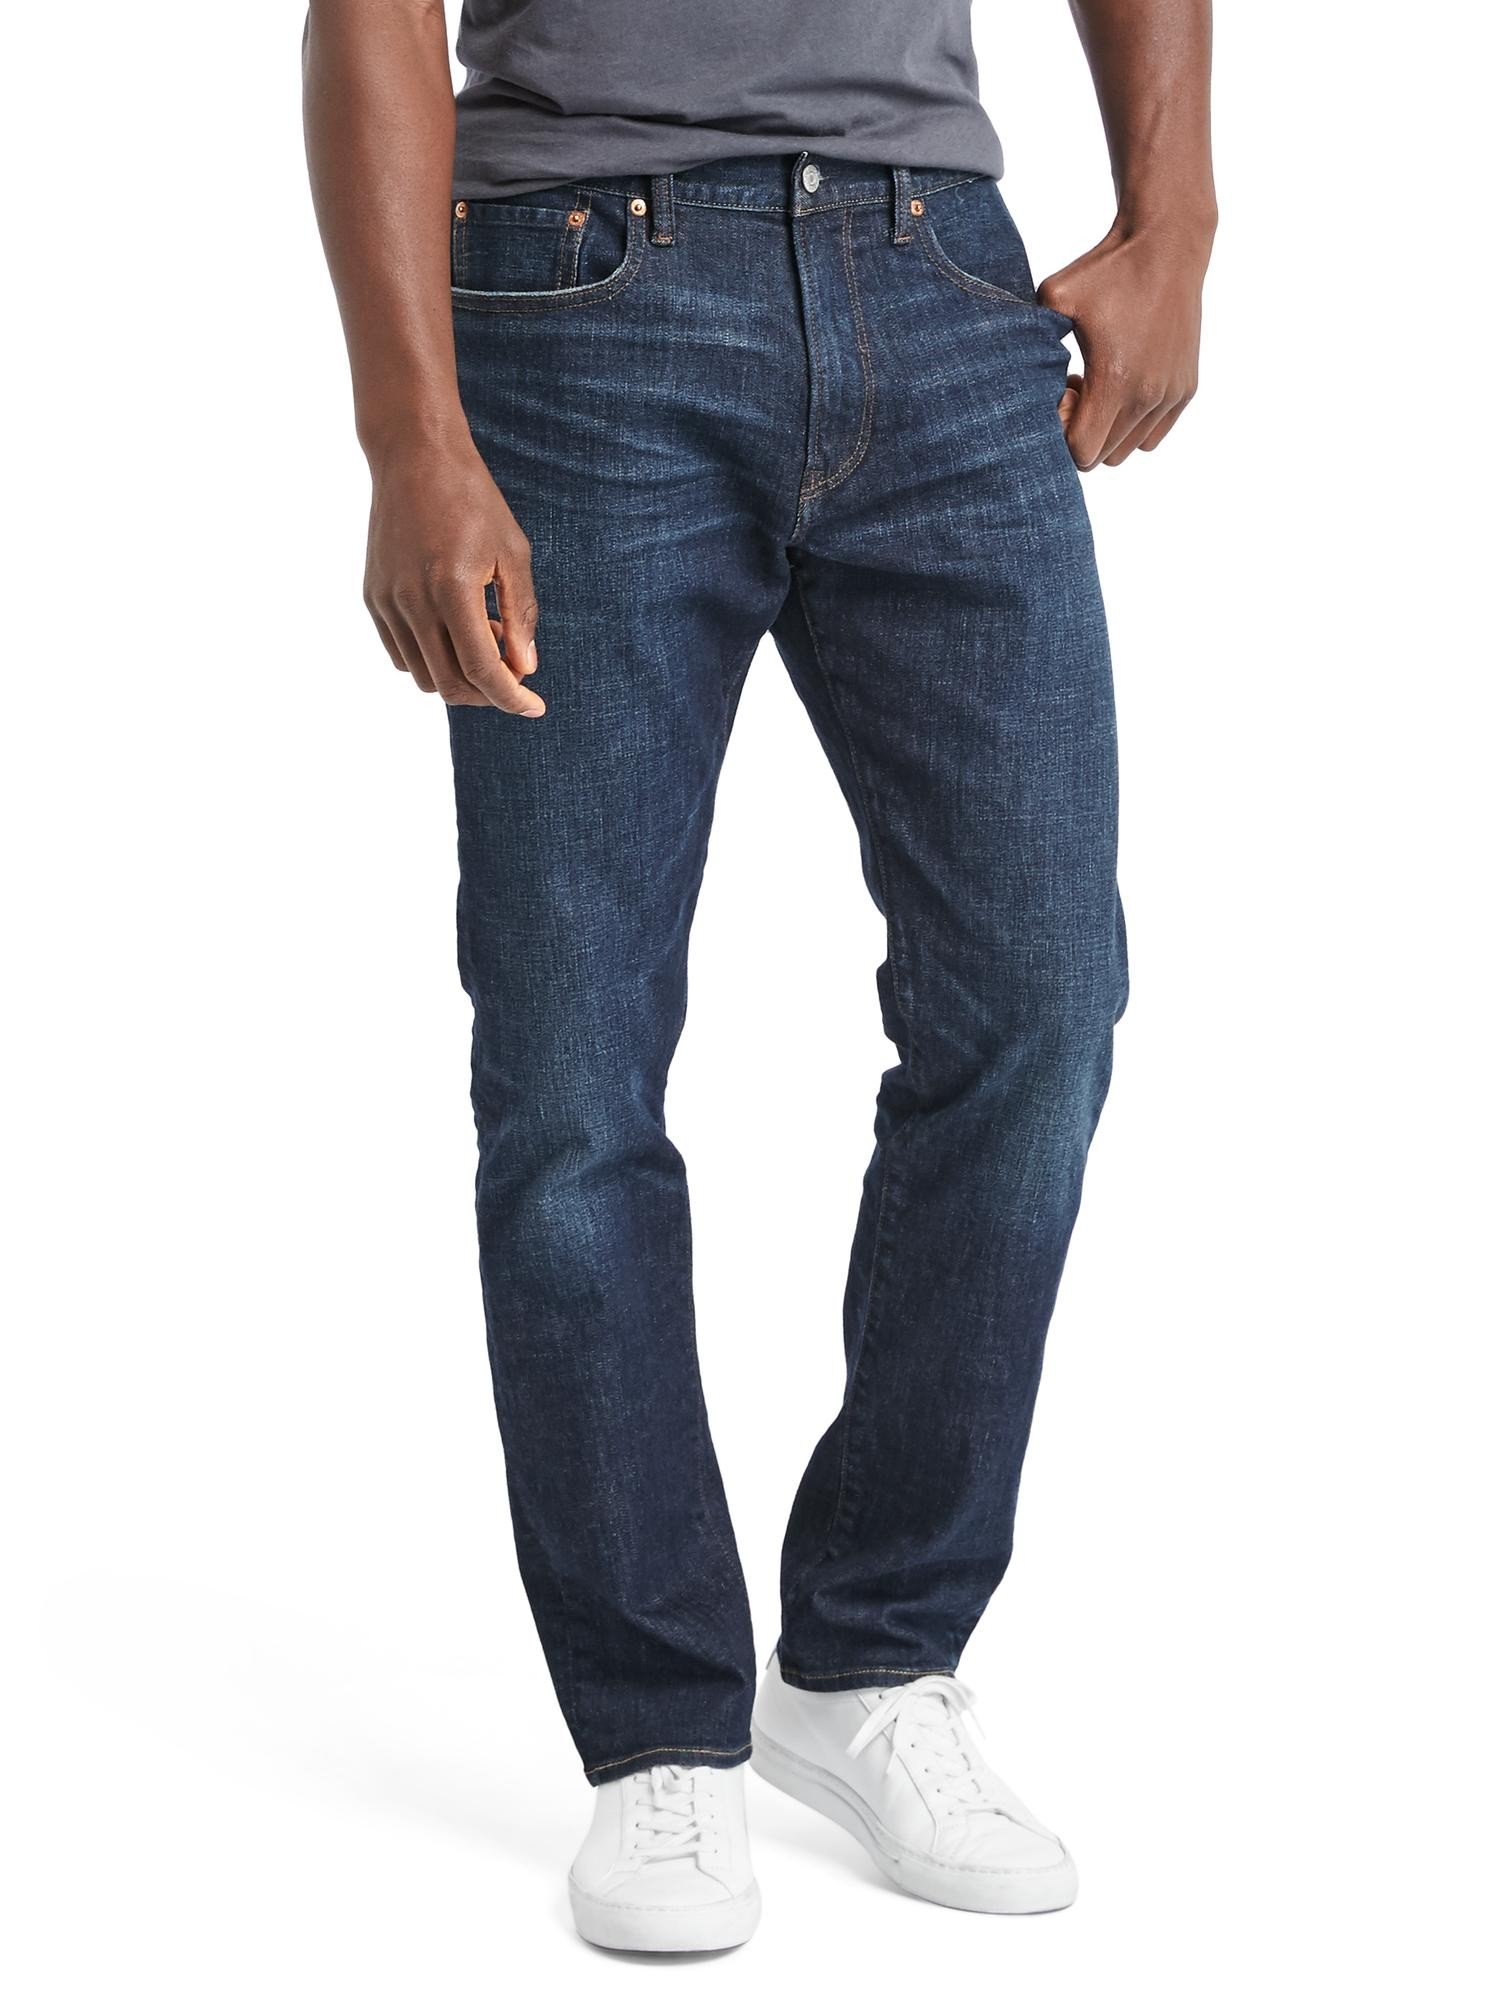 Athletic taper fit jean pantolon product image